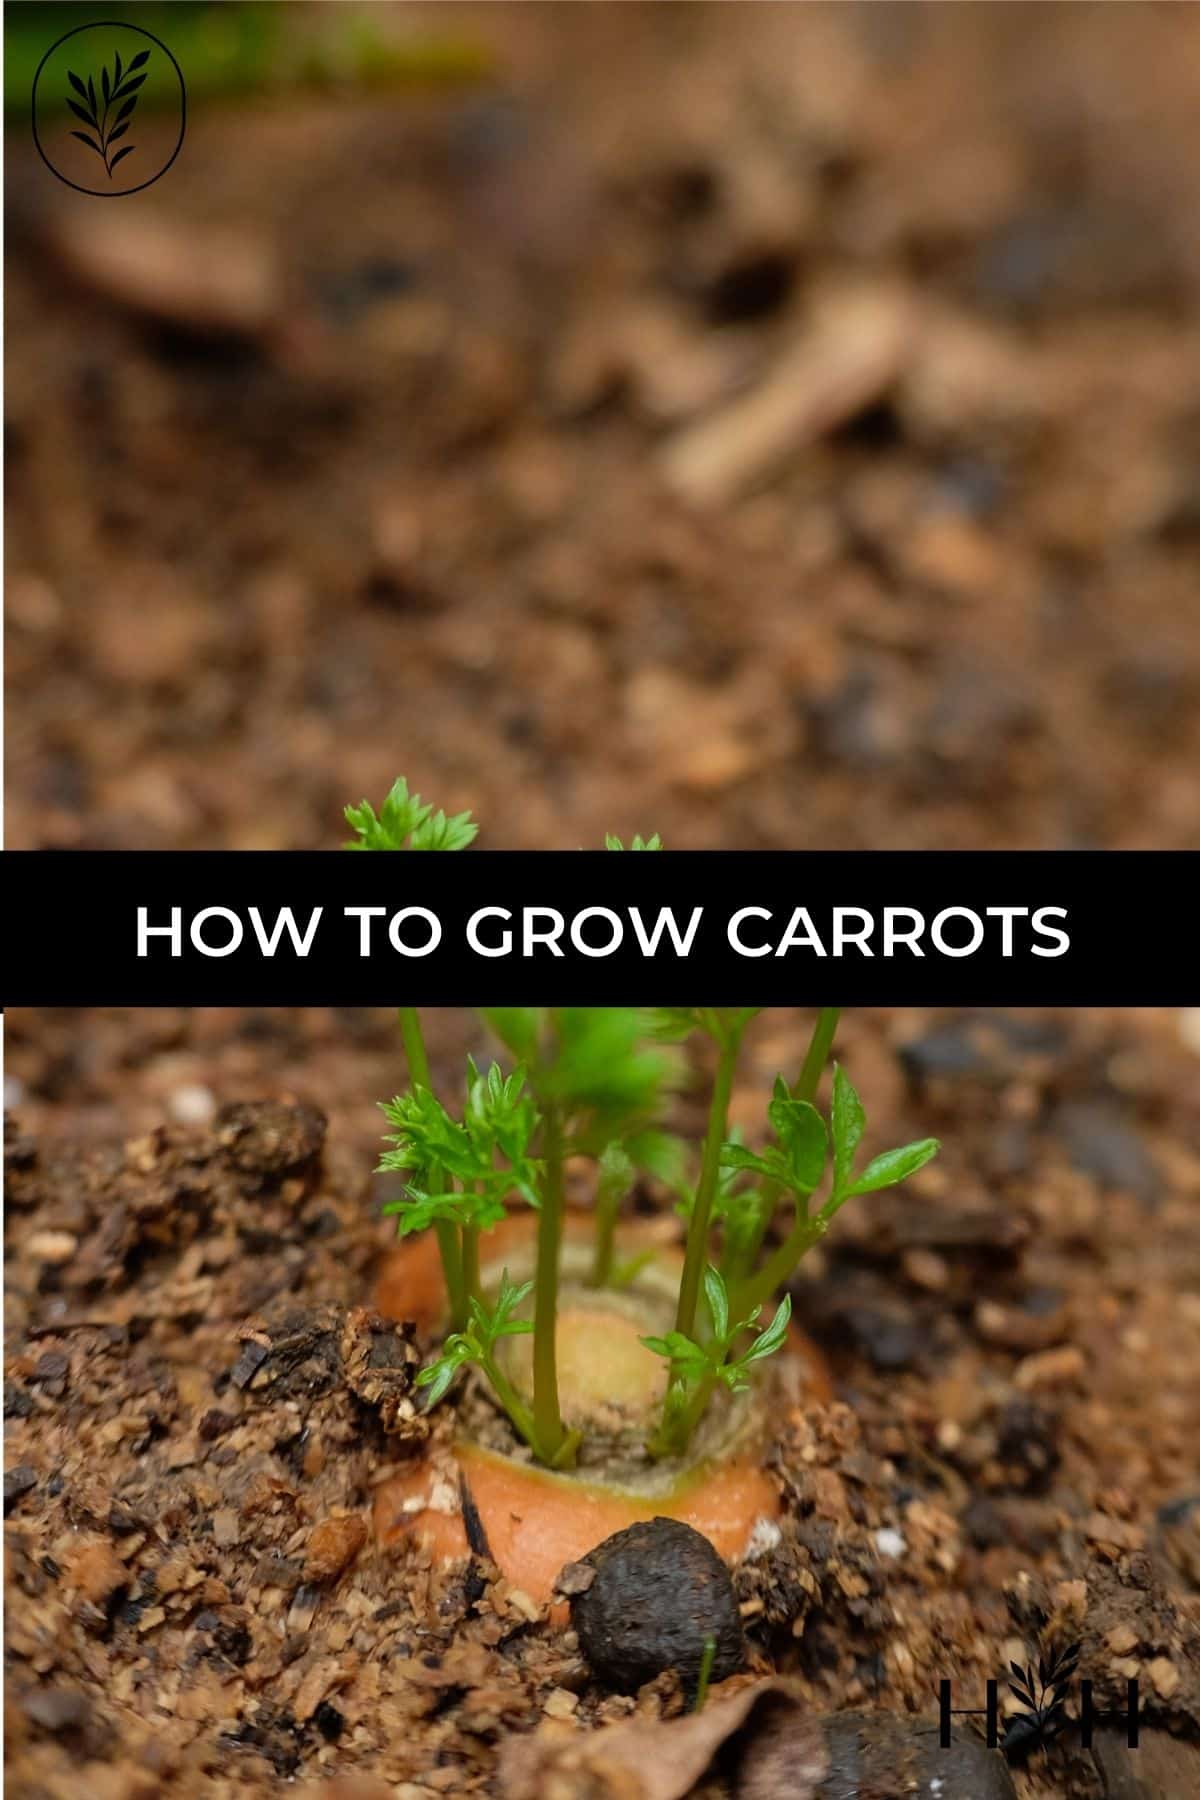 How to grow carrots via @home4theharvest